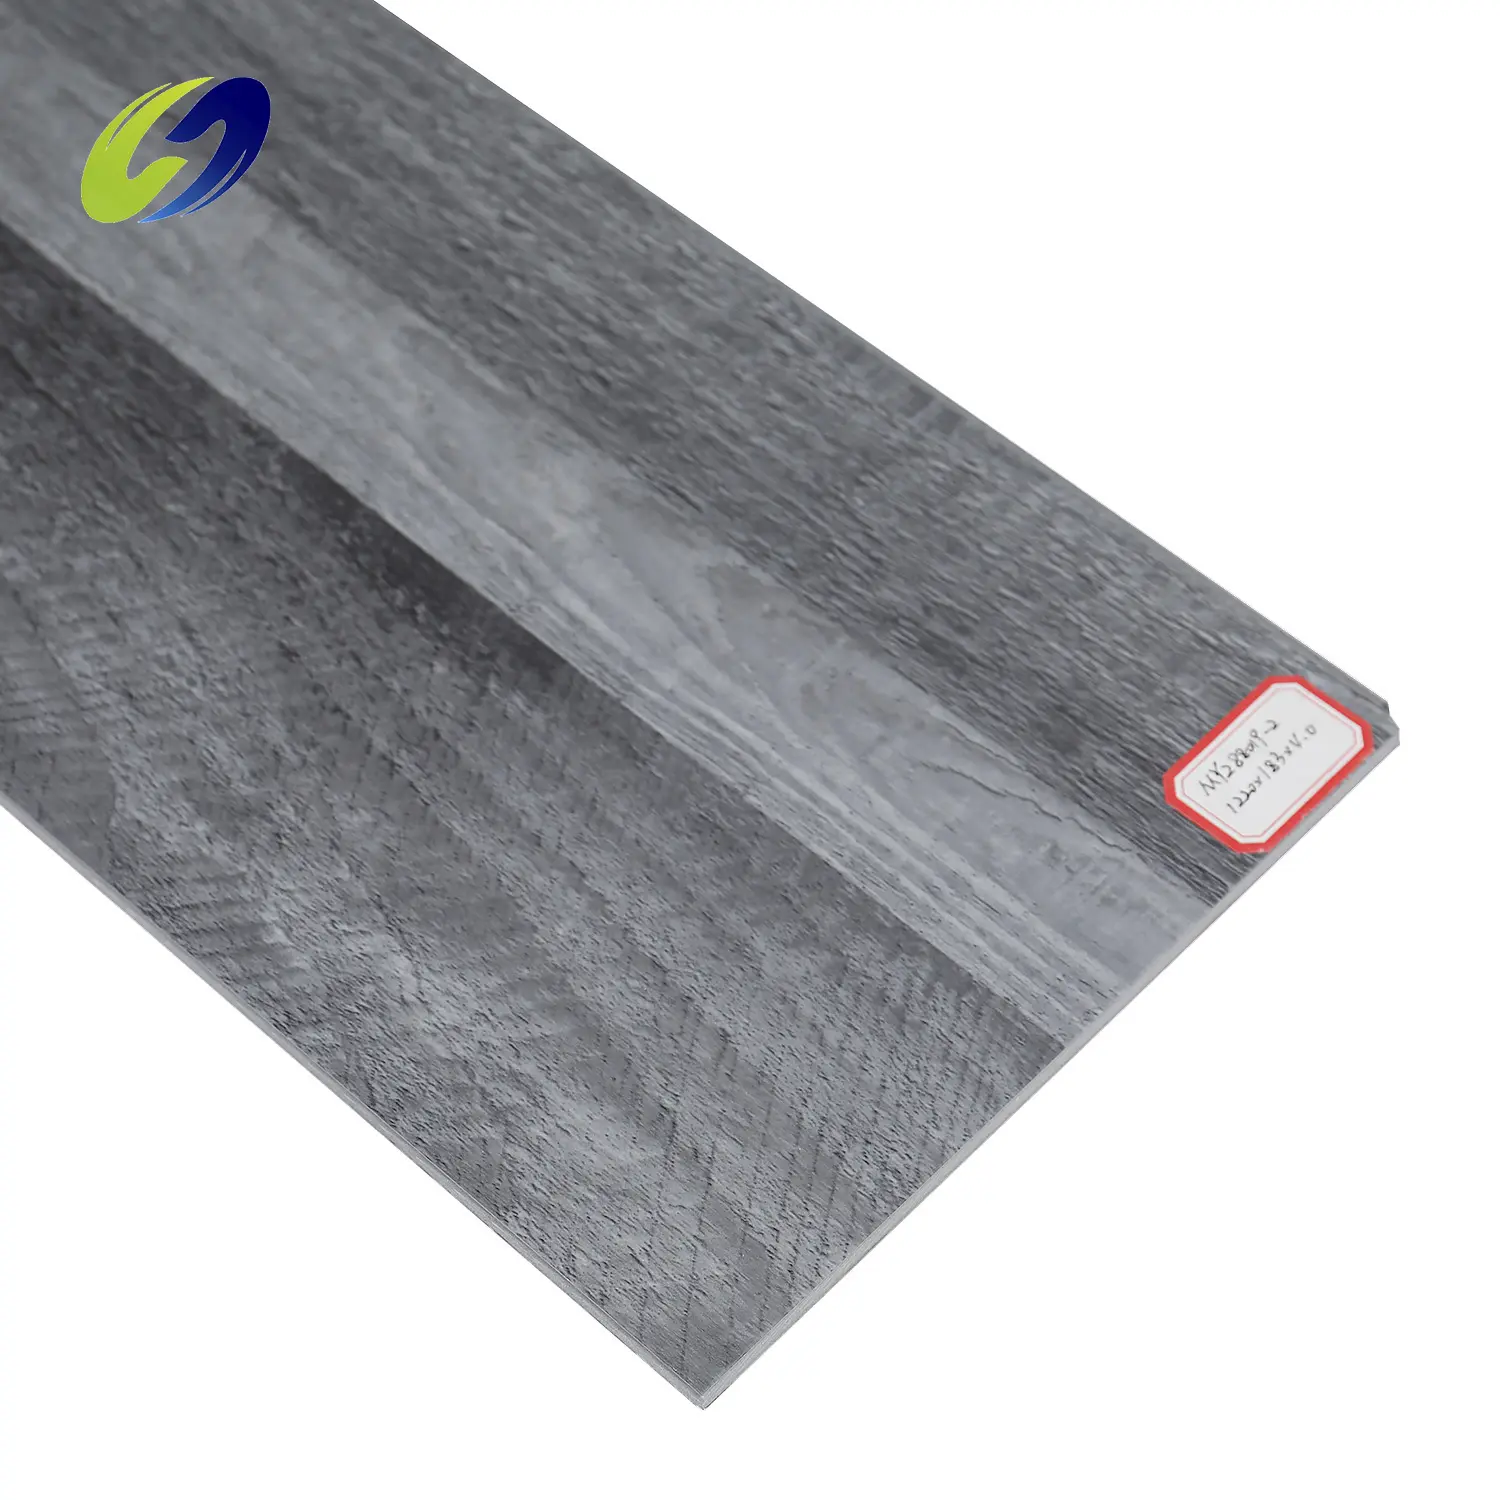 dark grey color wooden texture uniclic SPC pvc vinyl flooring